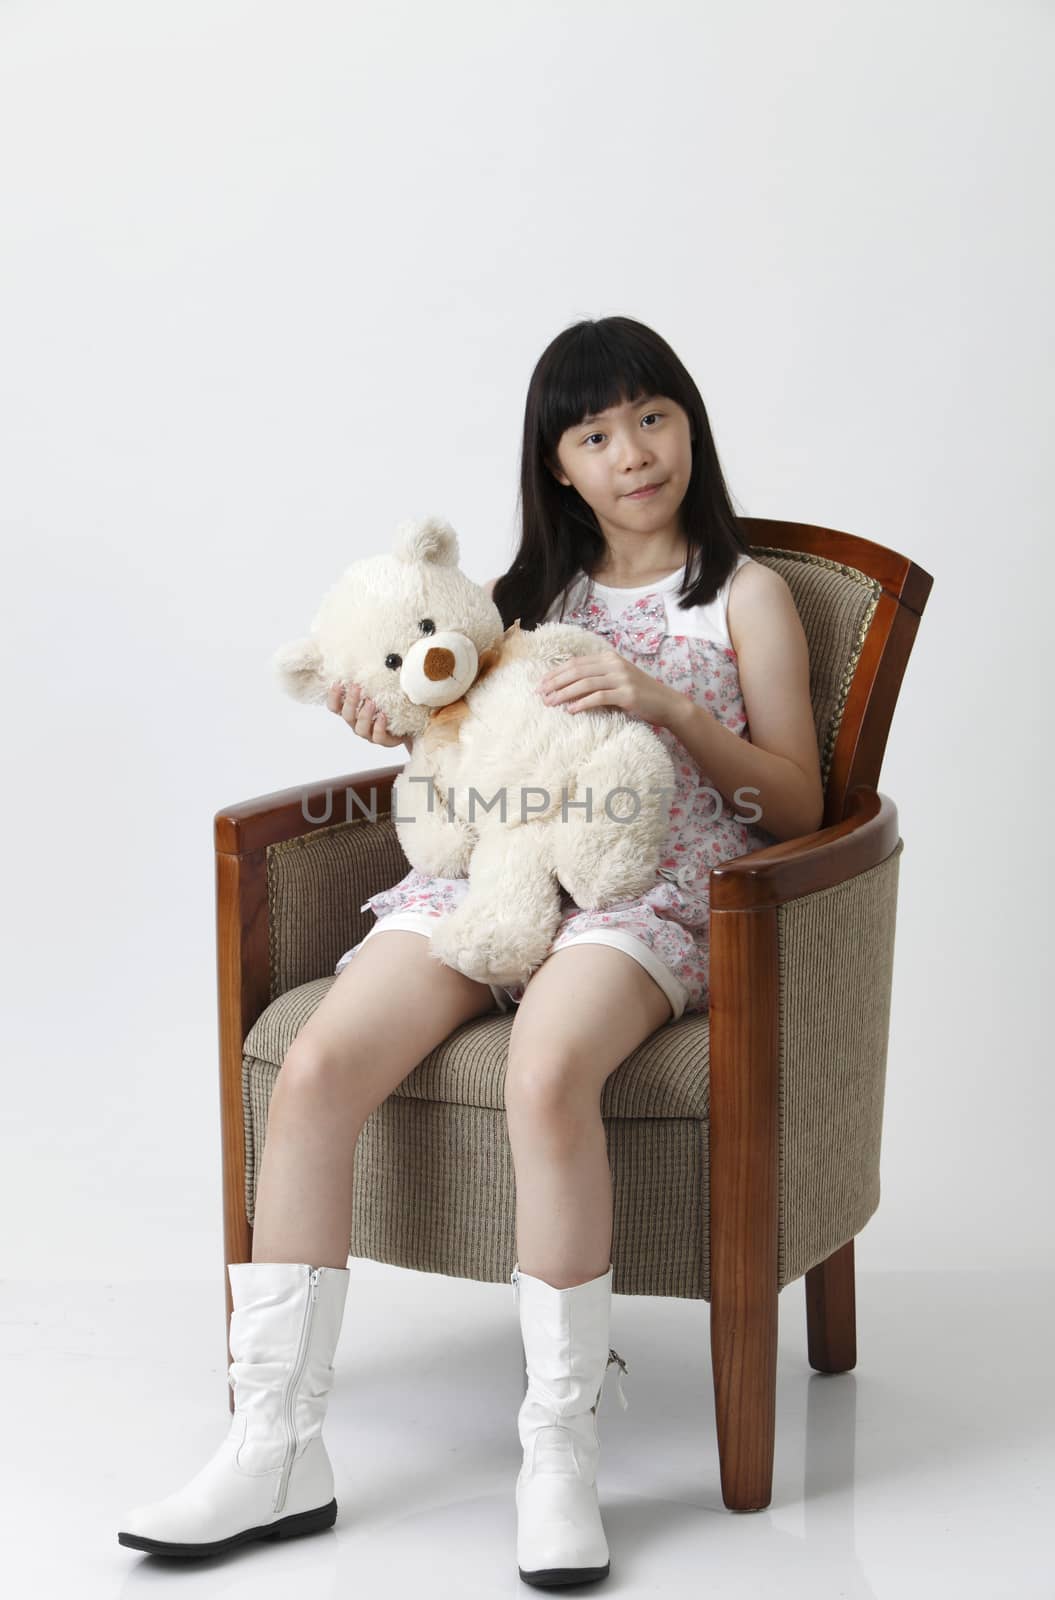 chinese girl holding teddy bear looking at camera